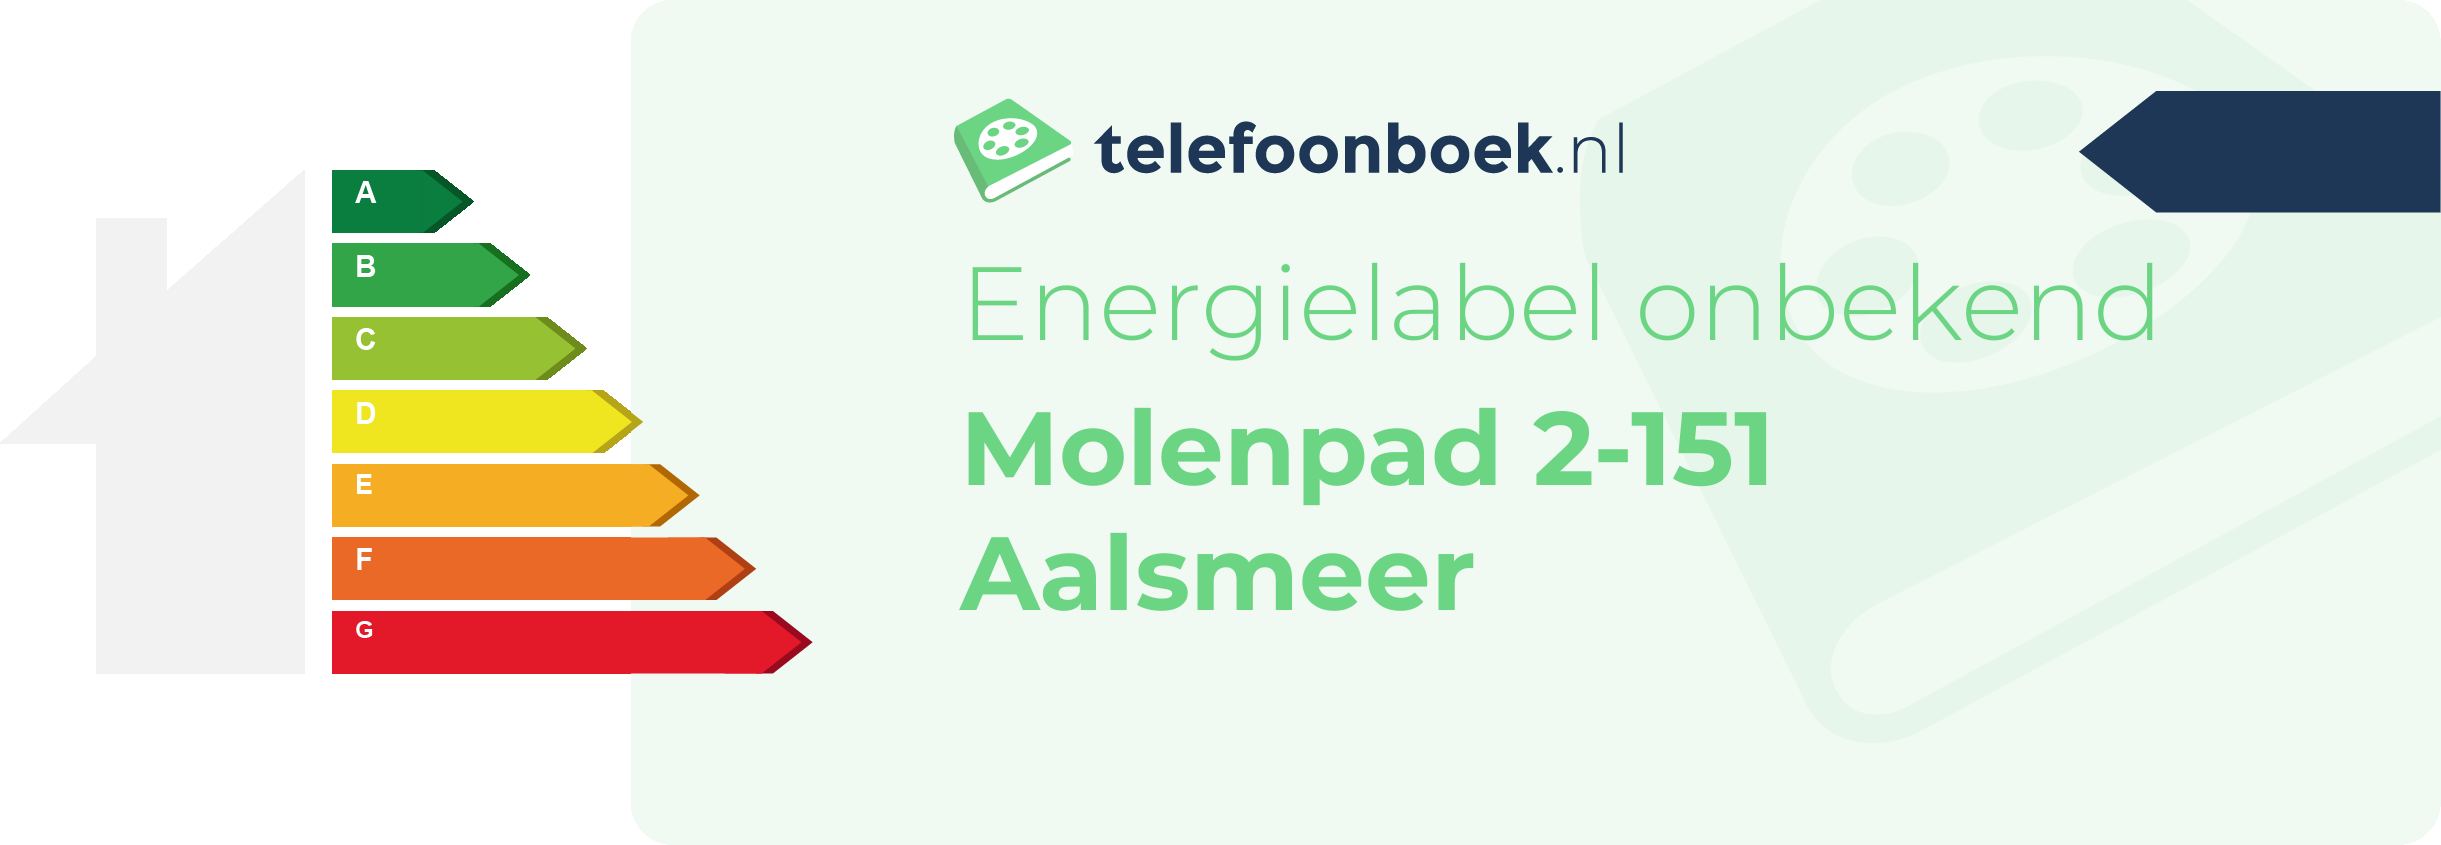 Energielabel Molenpad 2-151 Aalsmeer